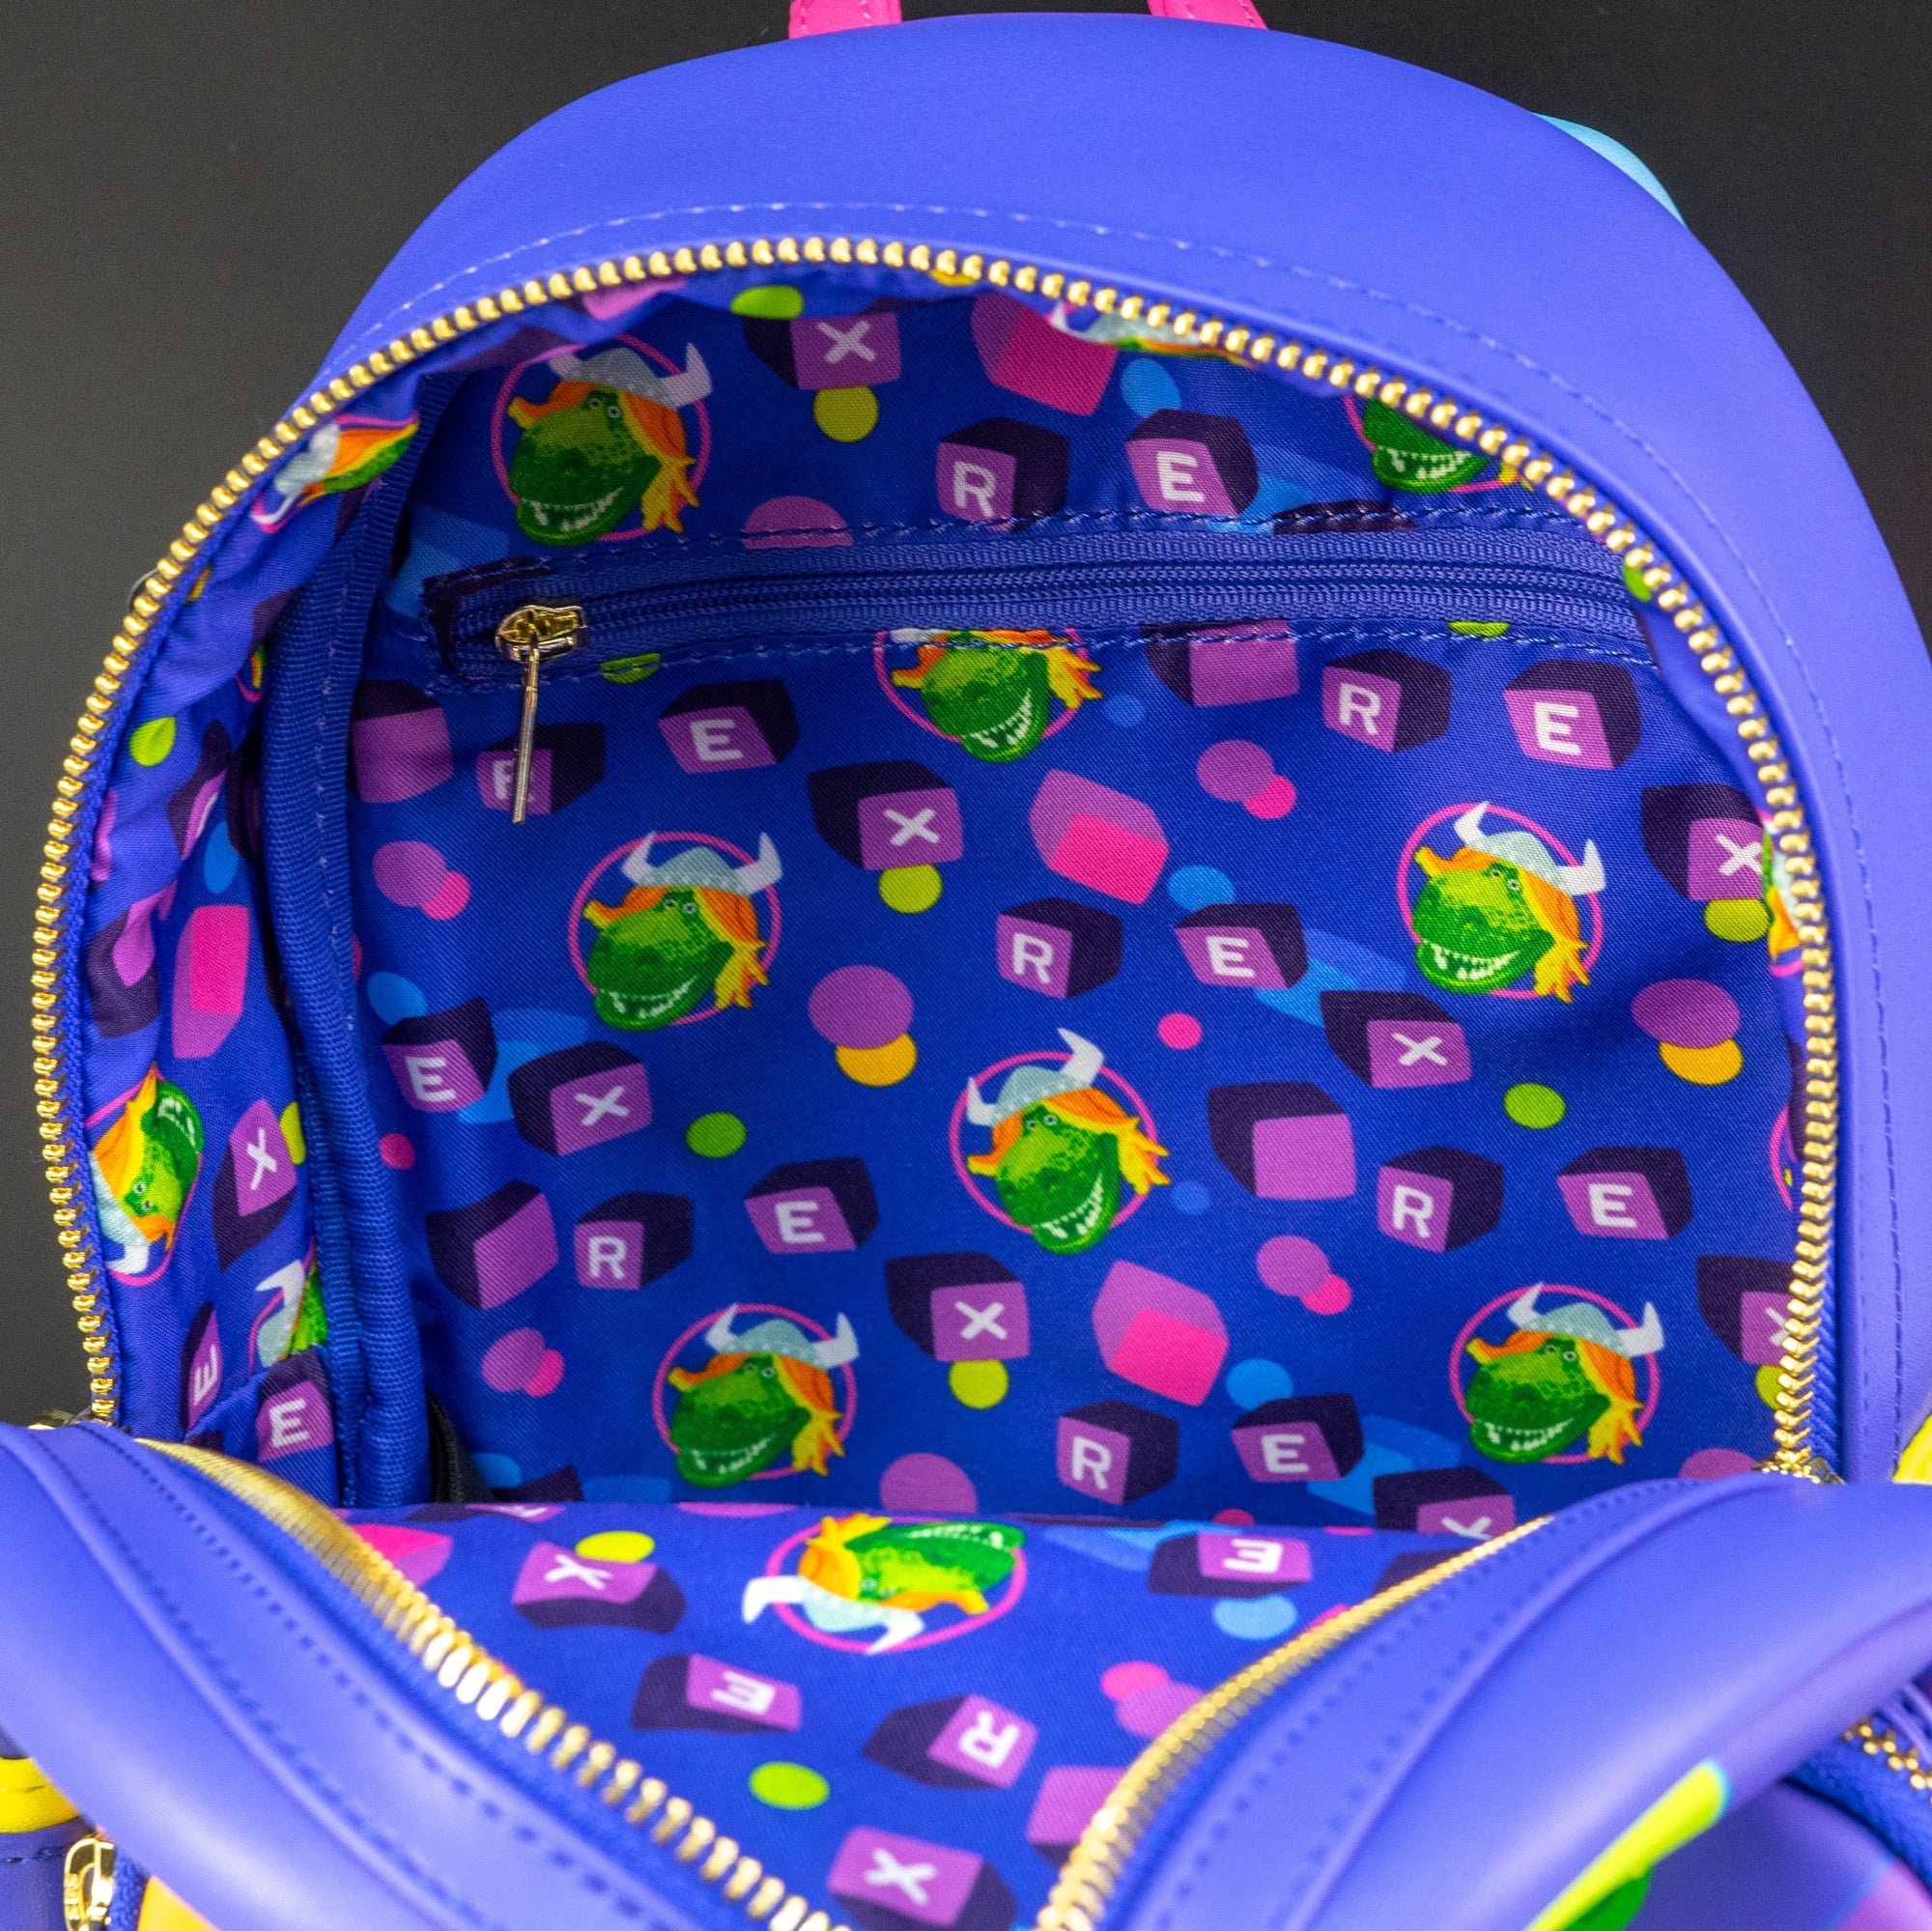 Loungefly x Disney Pixar Toy Story Partysaurus Rex Mini Backpack - GeekCore